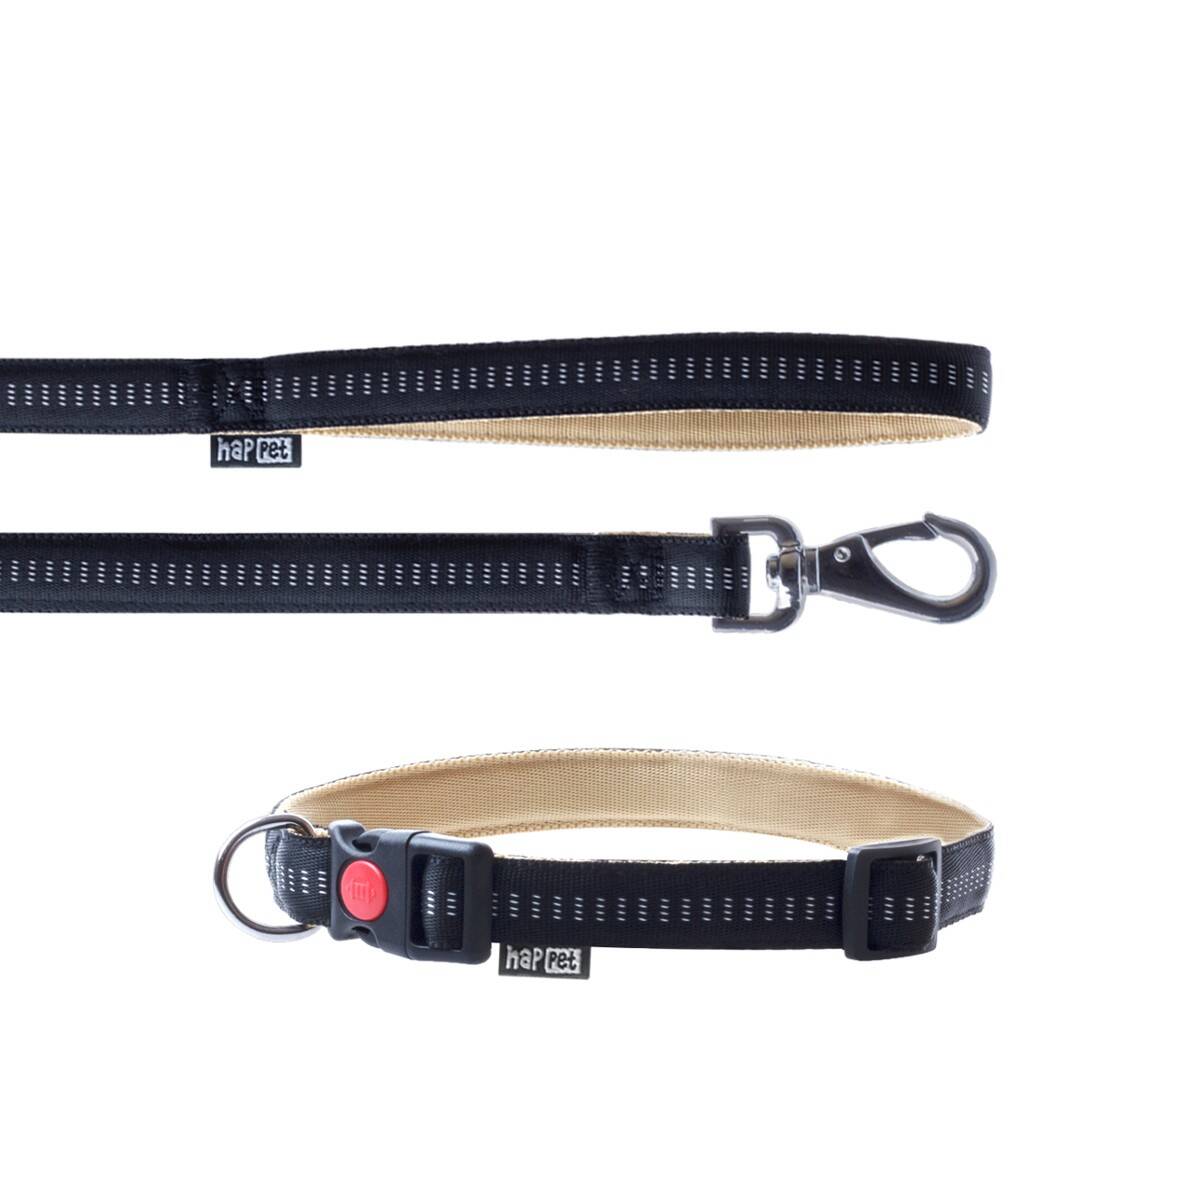 Nylon Hundeleine und Halsband Set Soft Style Größe S  Happet schwarz S 1.0 cm (Z-JB41JJ)